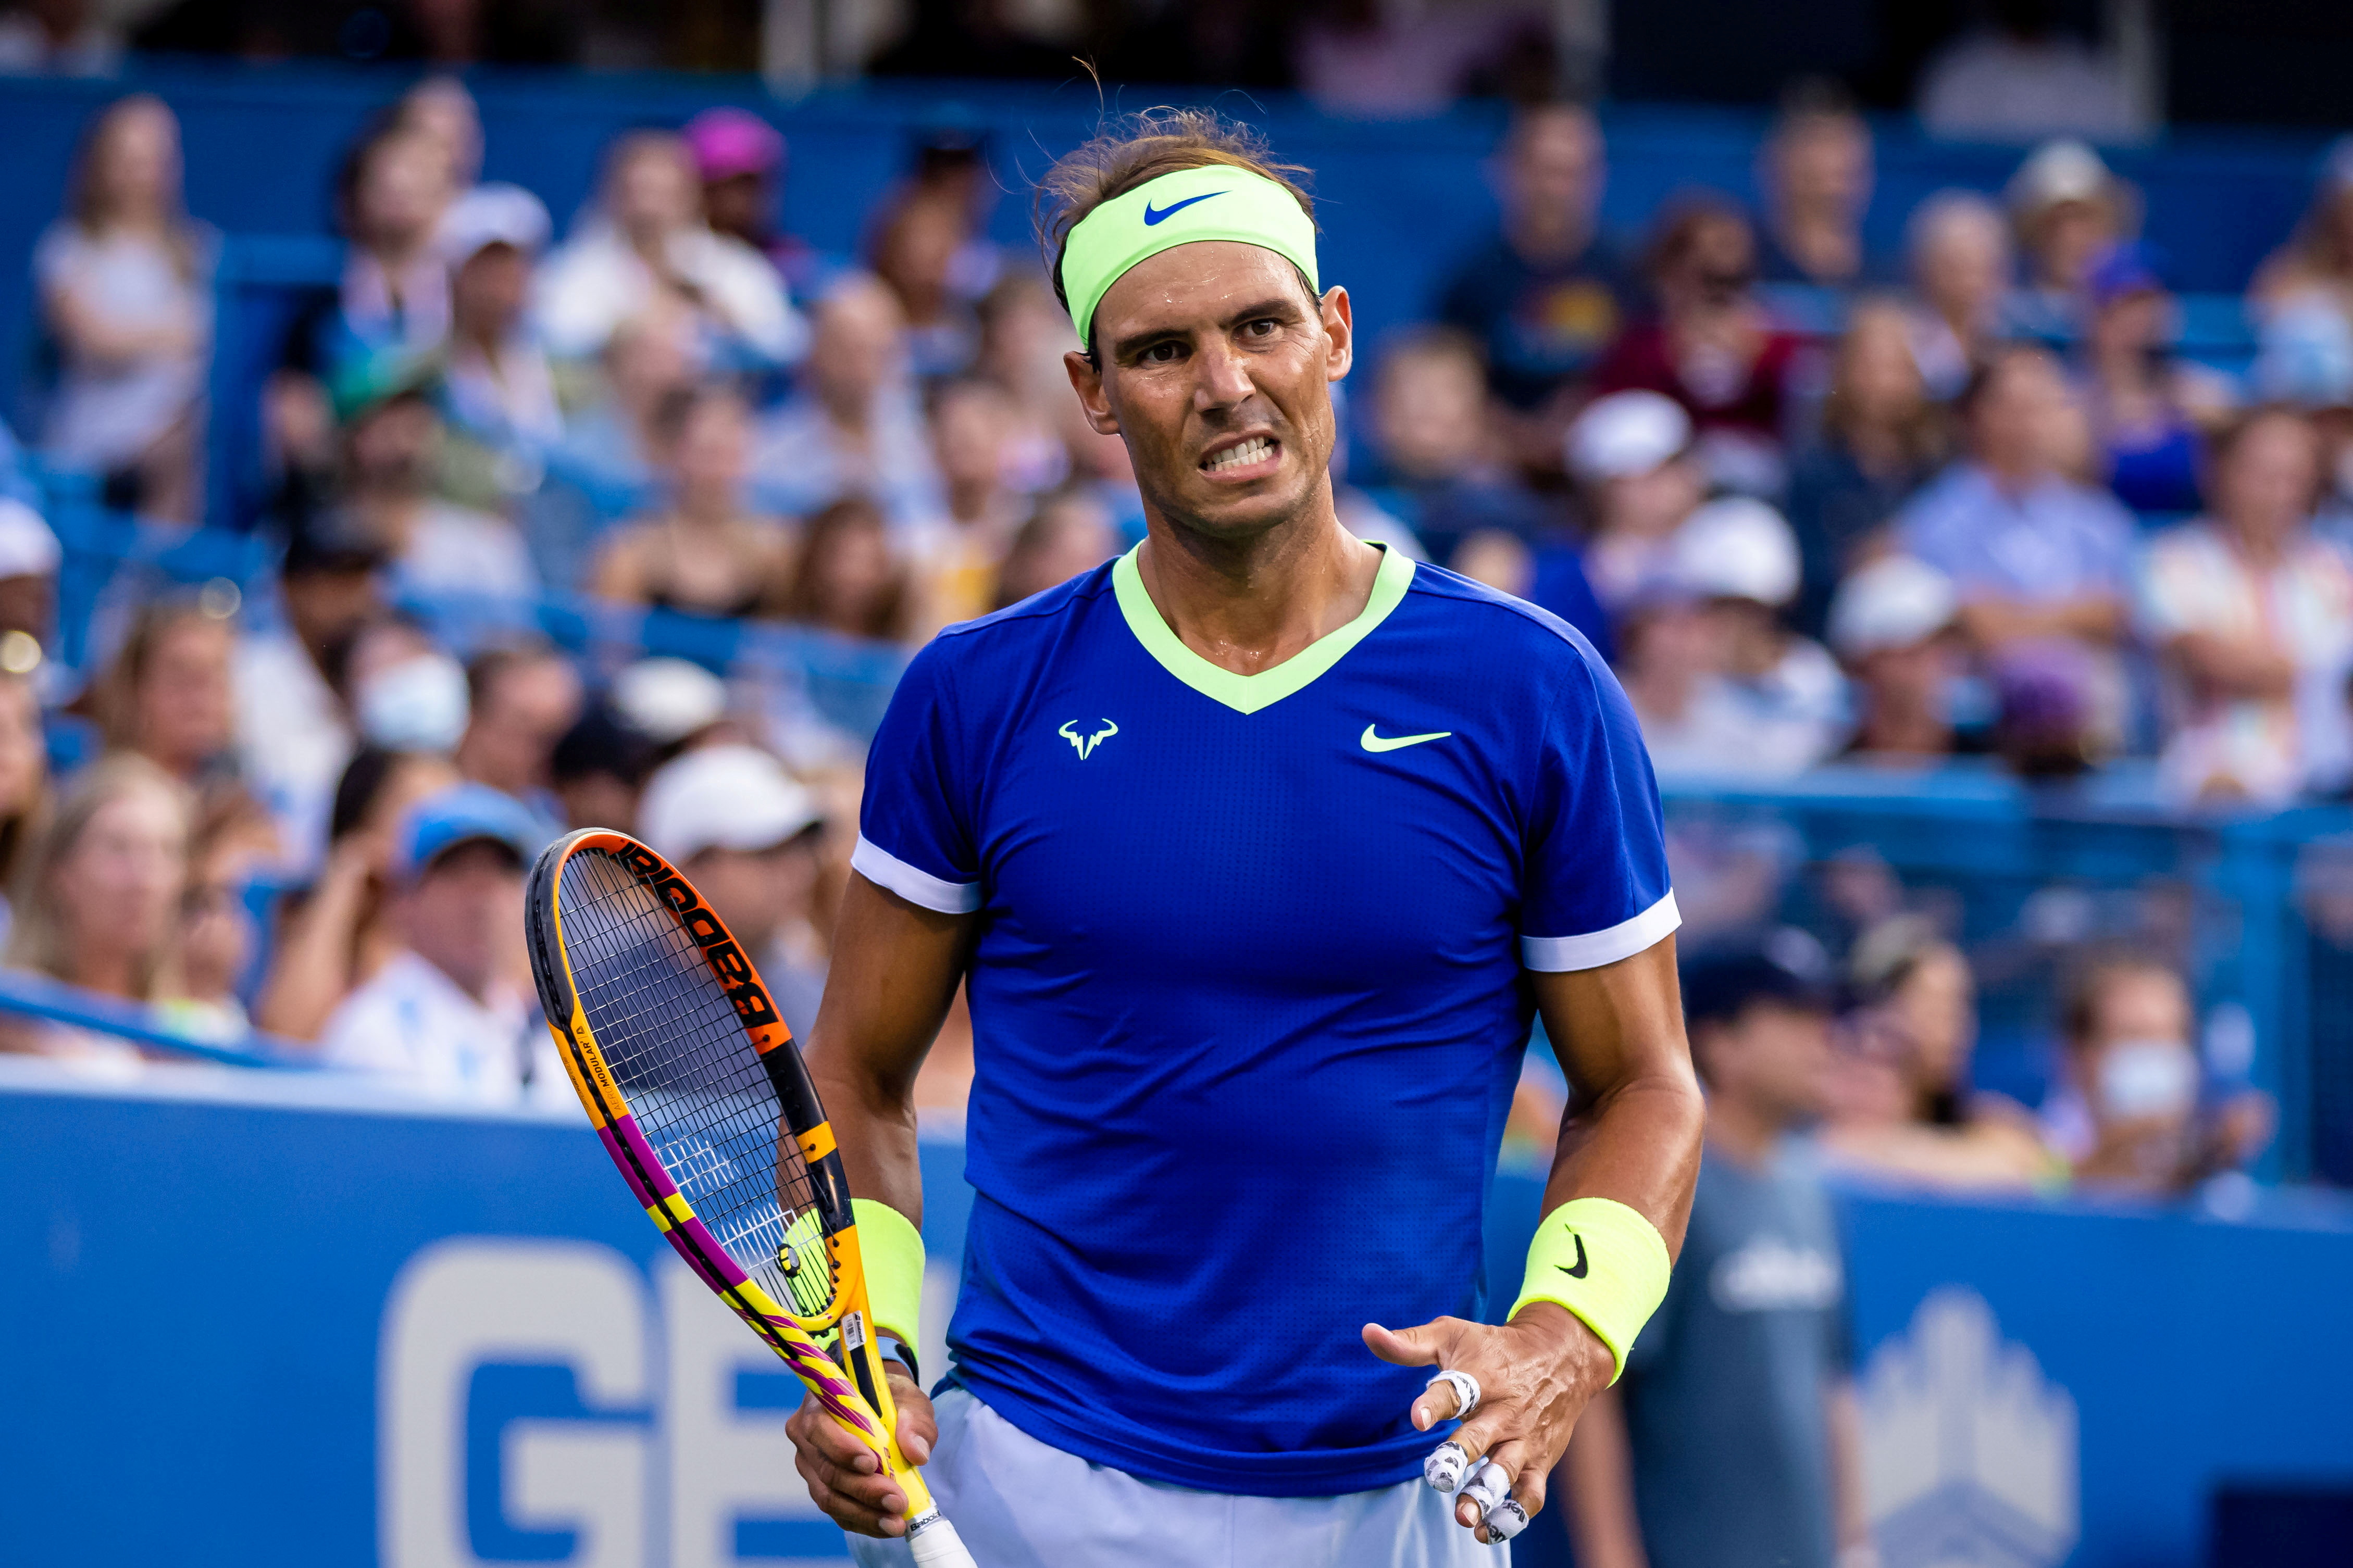 Aug 4, 2021; Washington, DC, USA; Rafael Nadal of Spain reacts during the Citi Open at Rock Creek Park Tennis Center. Mandatory Credit: Scott Taetsch-USA TODAY Sports